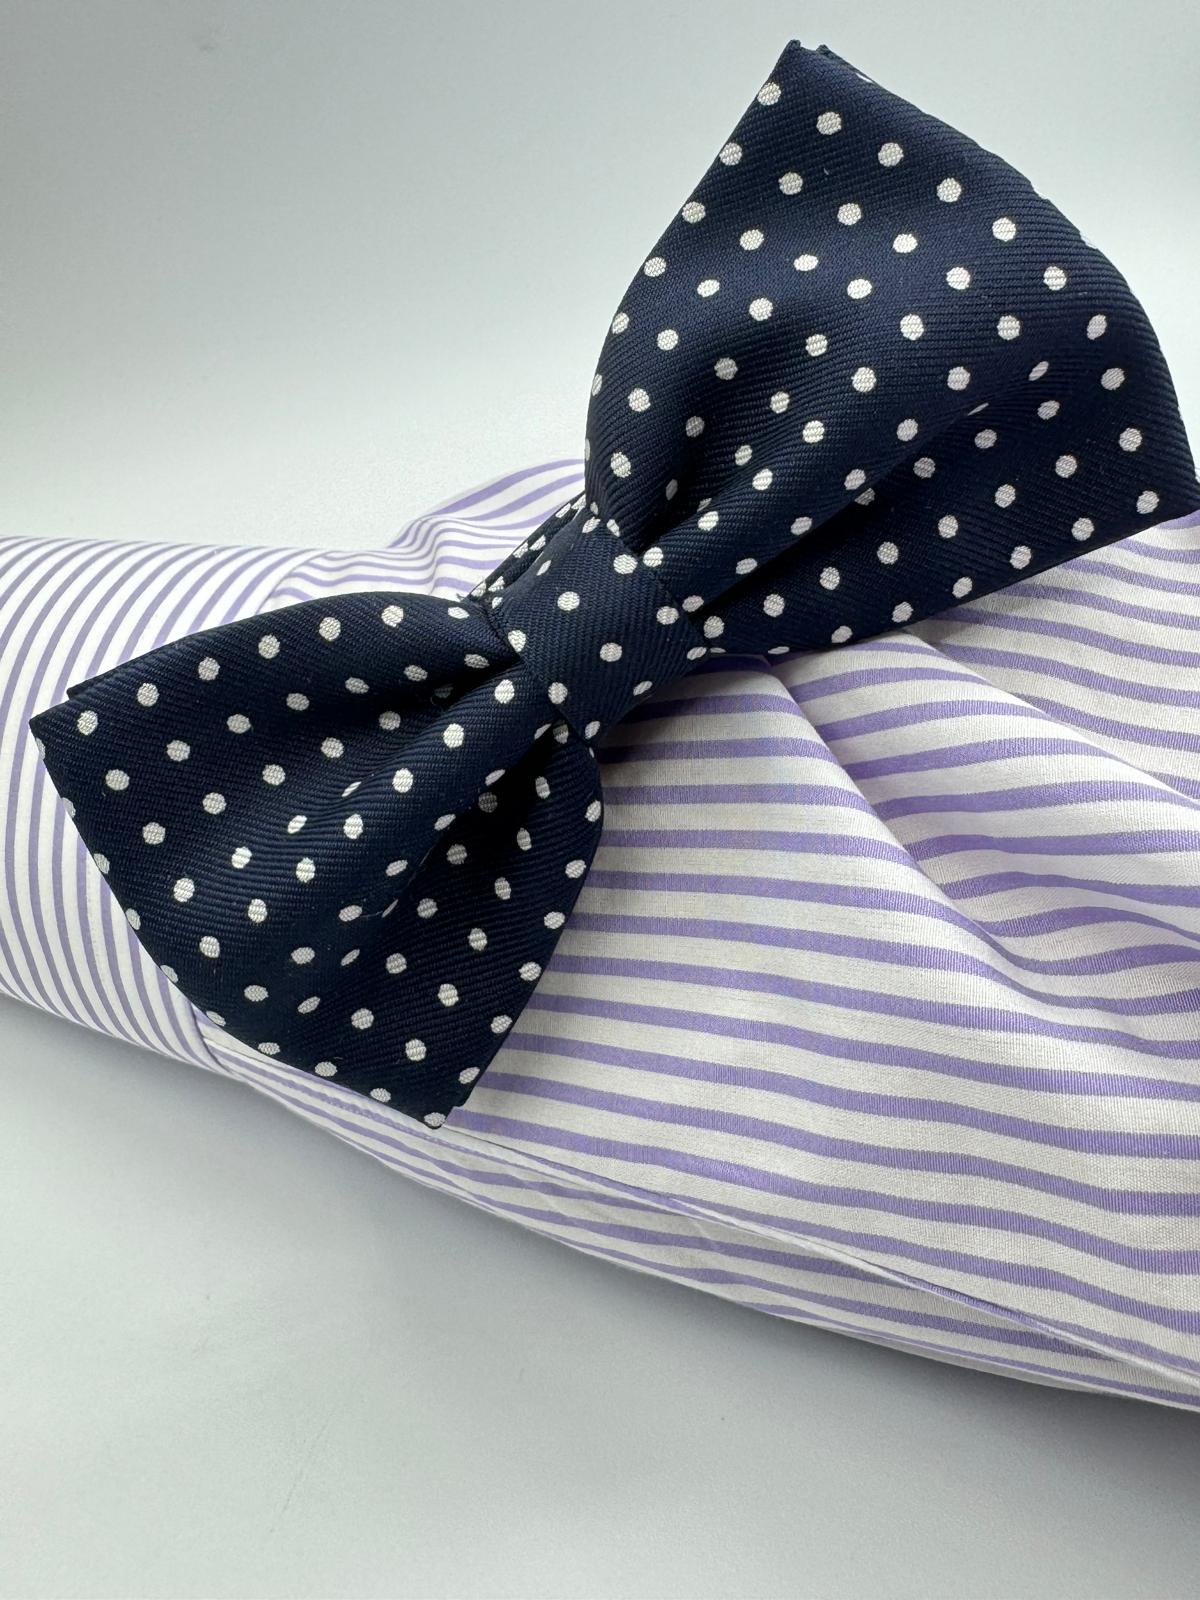 Cruciani & Bella Bow Ties - Printed  Silk  - Blue and White Polka Dots #8008